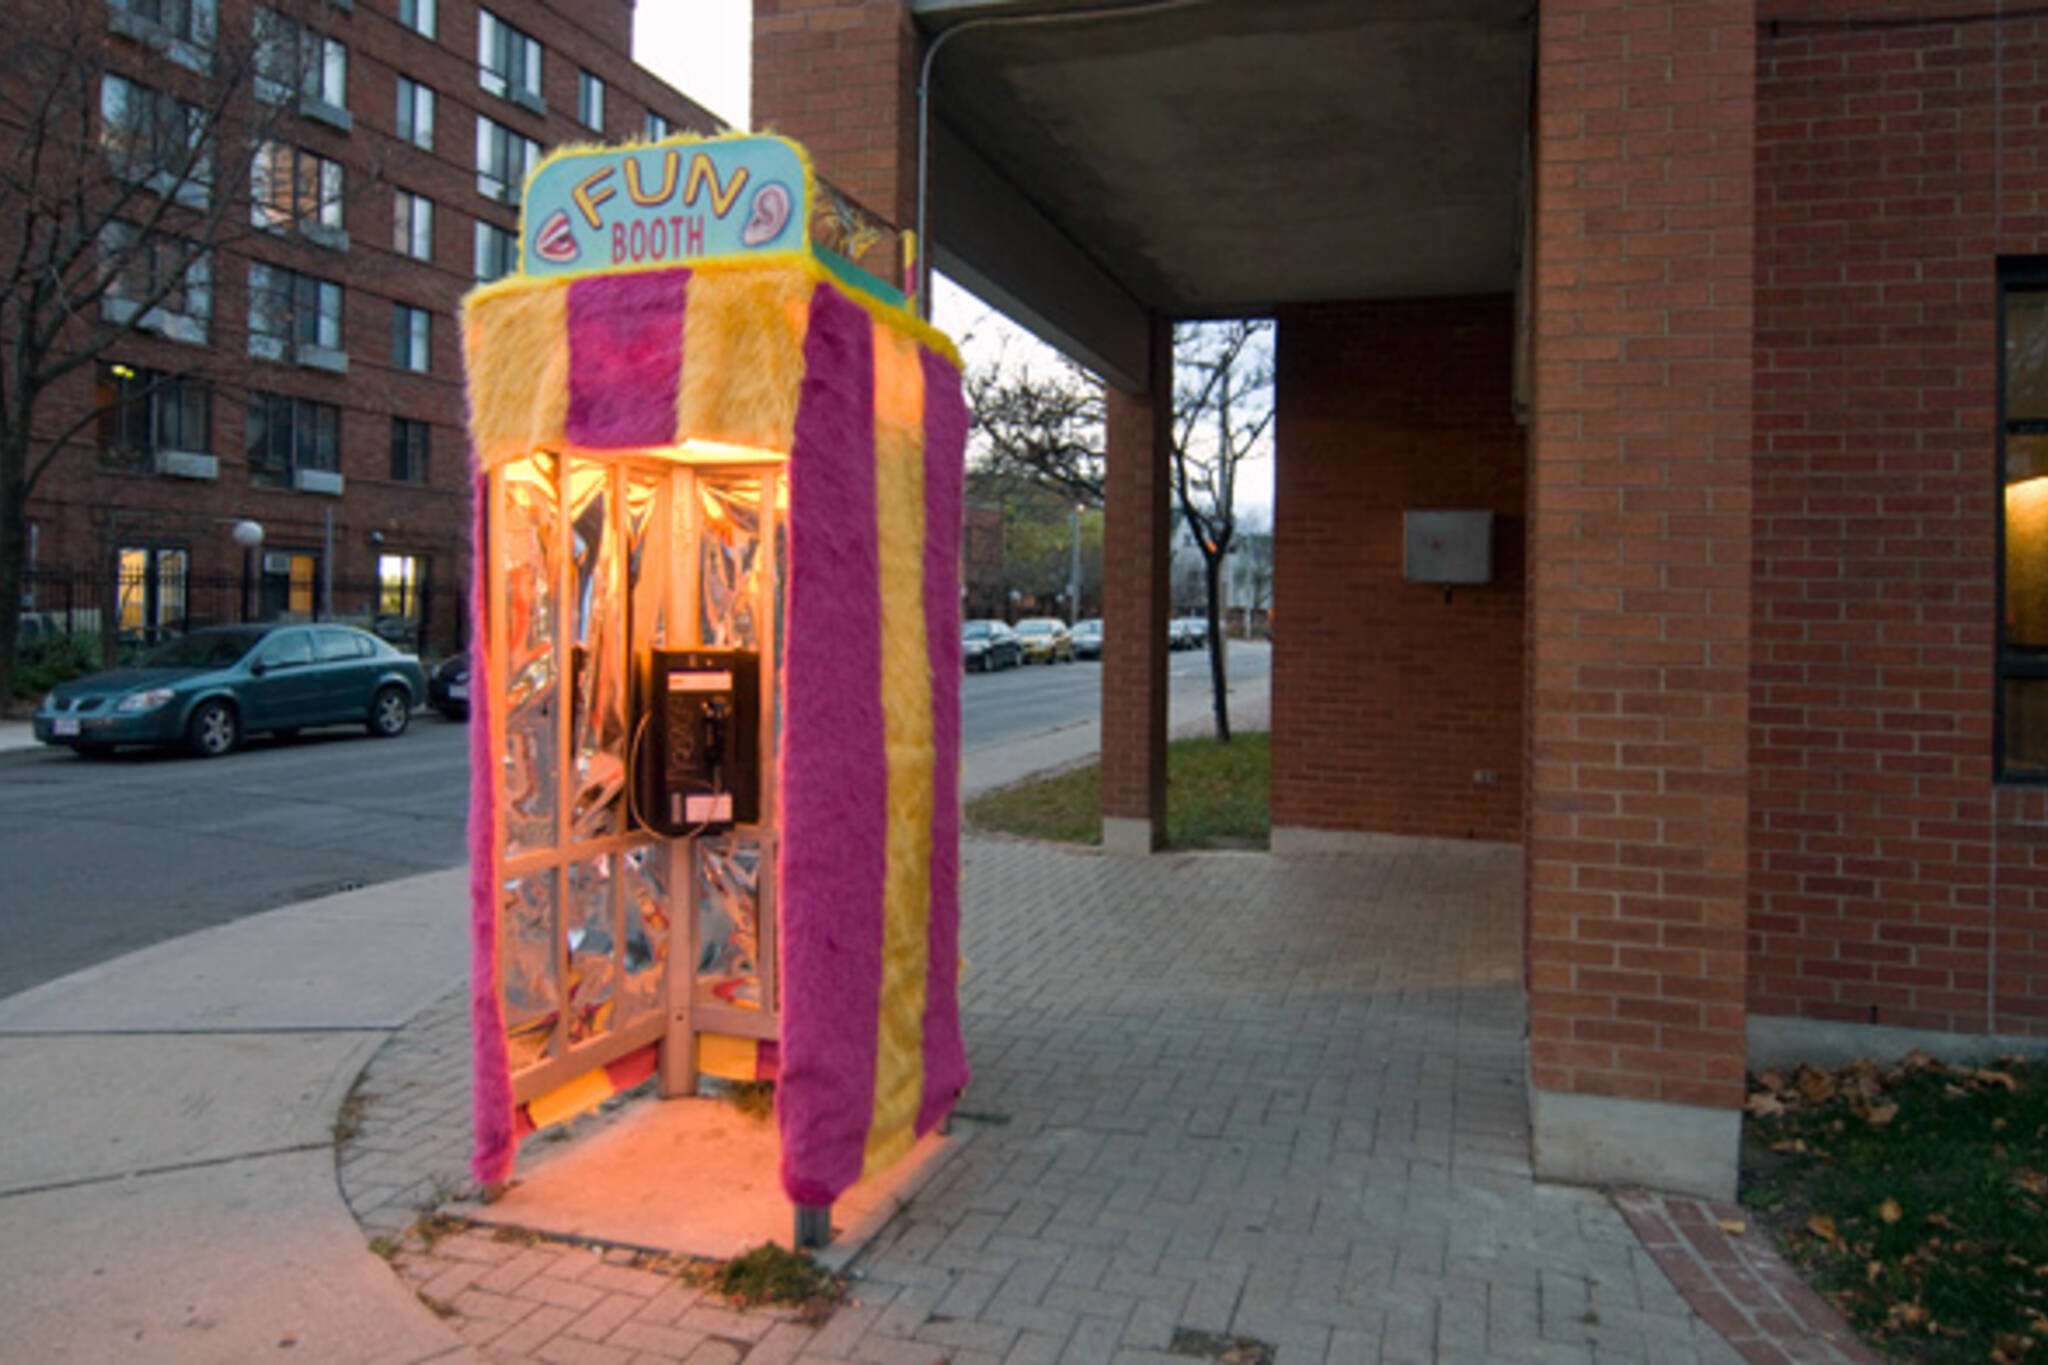 Toronto phone booth fun house